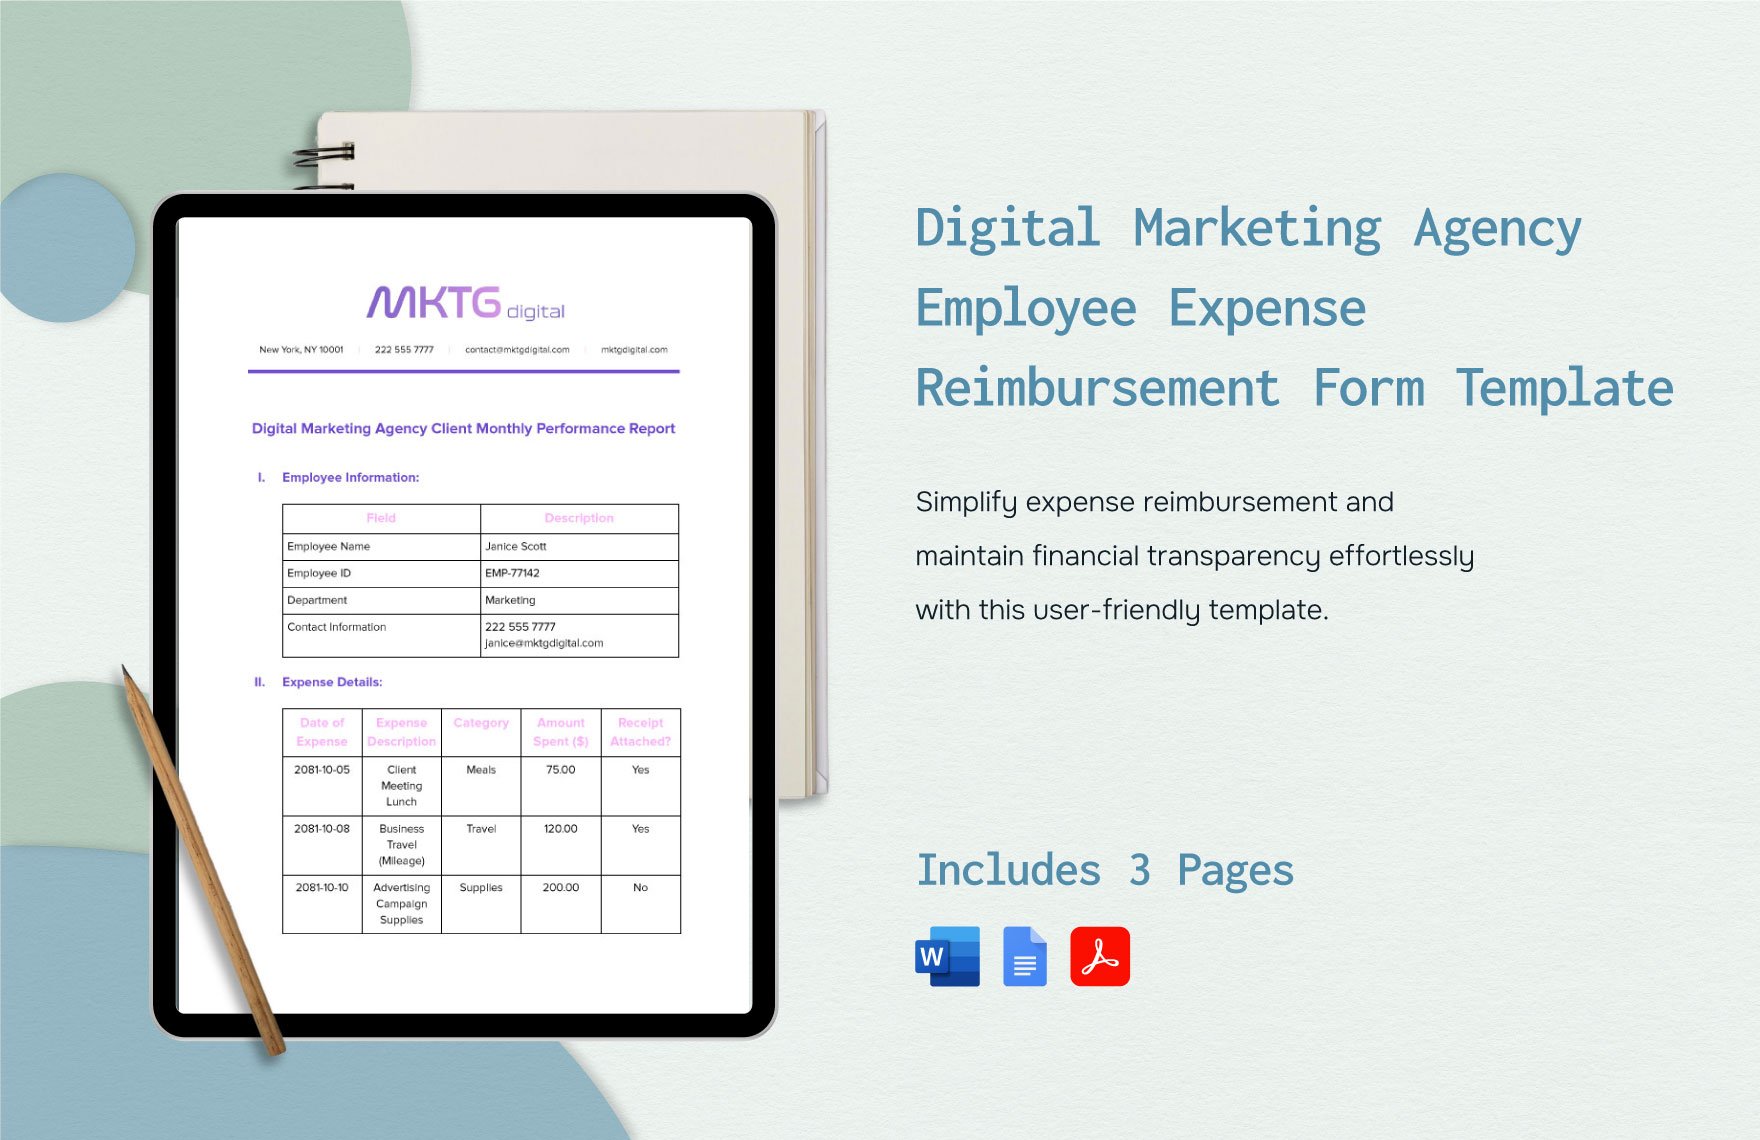 Digital Marketing Agency Employee Expense Reimbursement Form Template